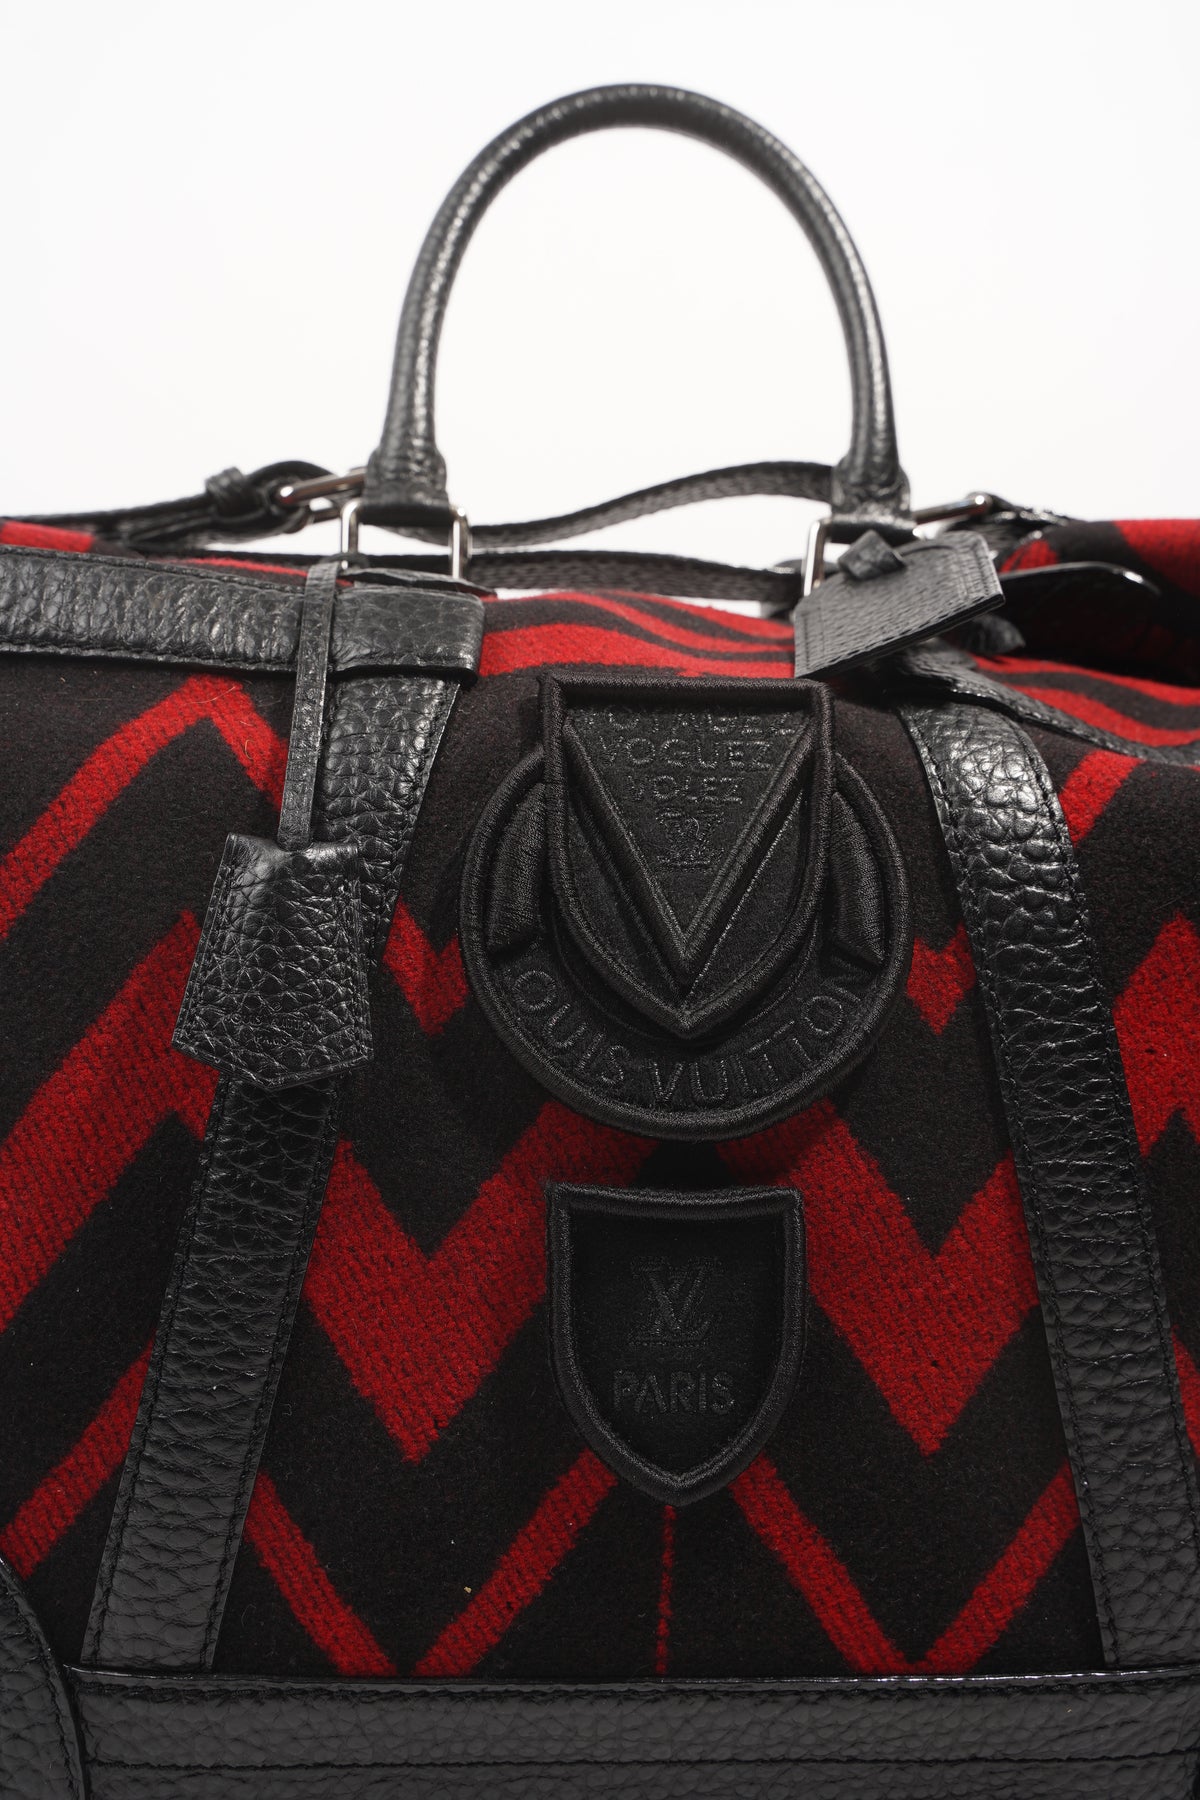 LOUIS VUITTON Empreinte Pochette Metis Marine Rouge  FASHIONPHILE  Louis  vuitton handbags Louis vuitton Fashion tote bag